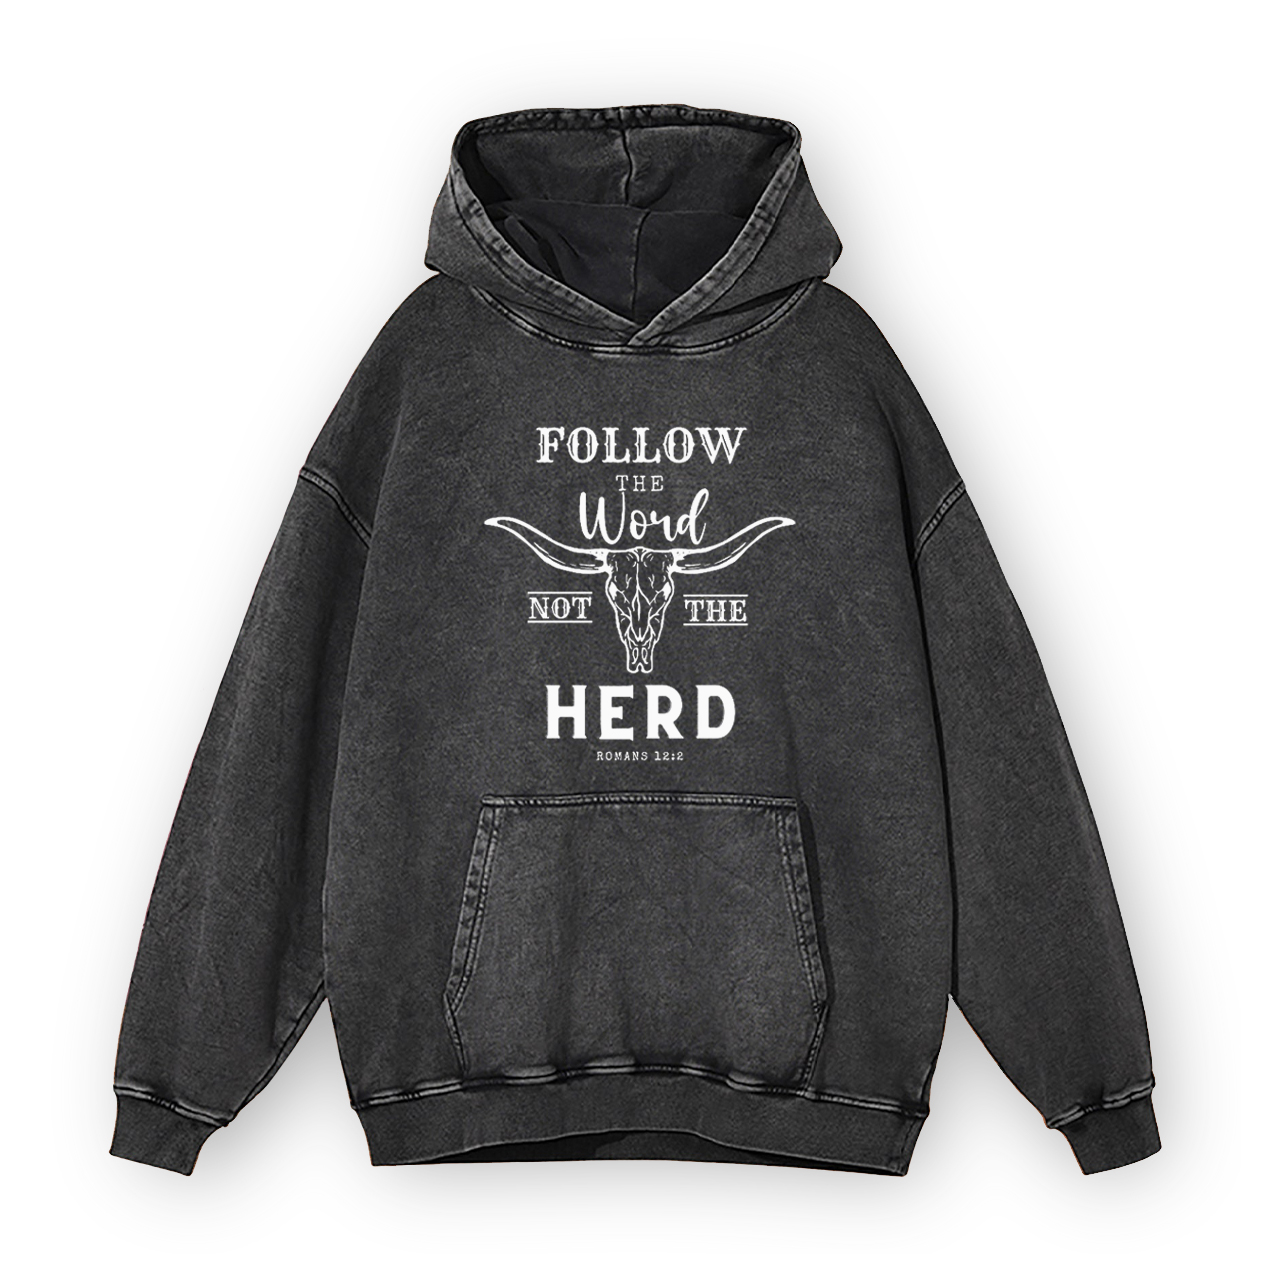 Follow The Word Not The Herd Garment-Dye Hoodies